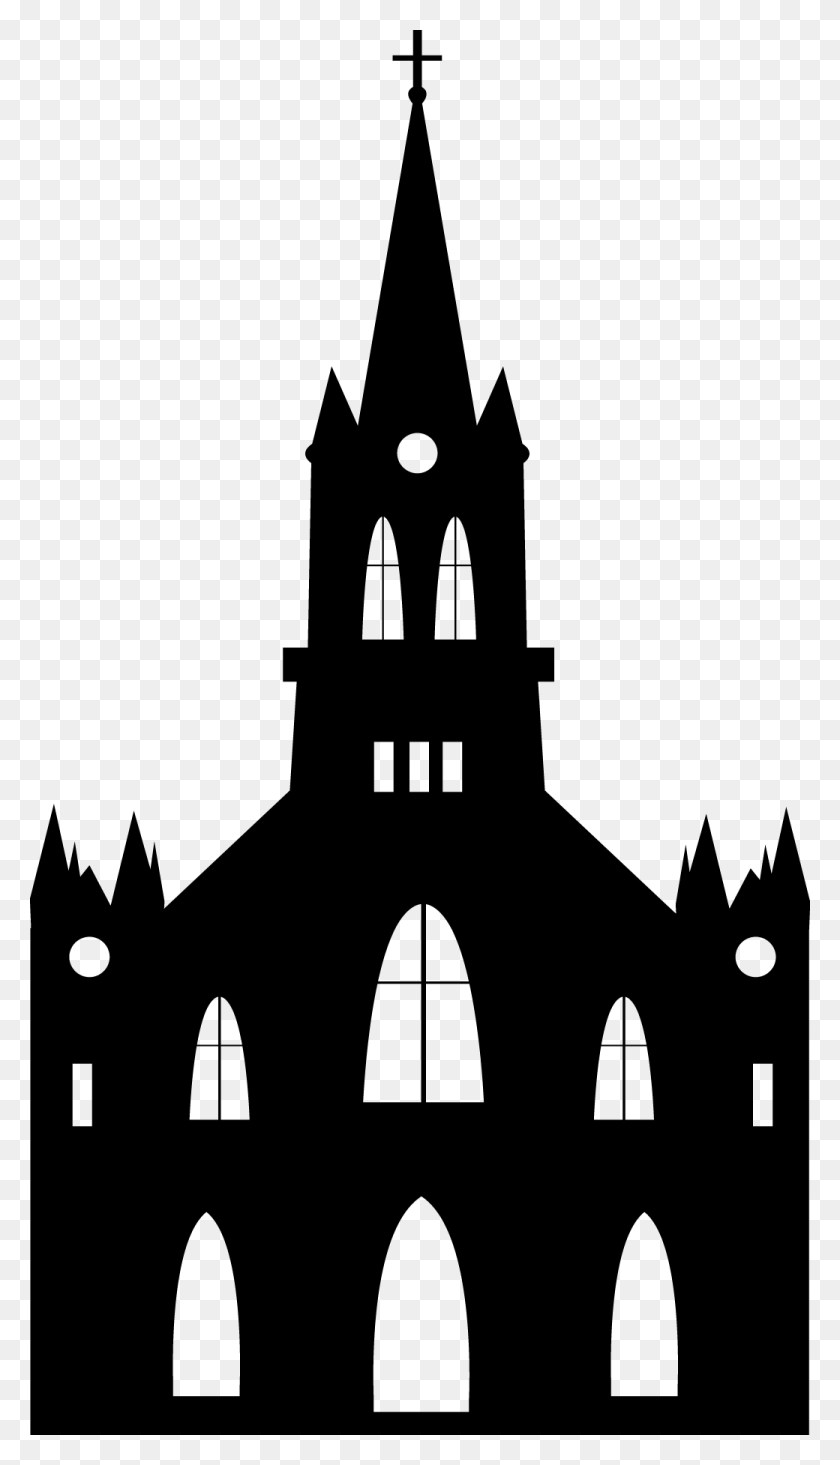 1040x1874 La Religión De La Iglesia Euclidiana, La Religión, La Silueta De La Iglesia, Edificio, Arquitectura Hd Png